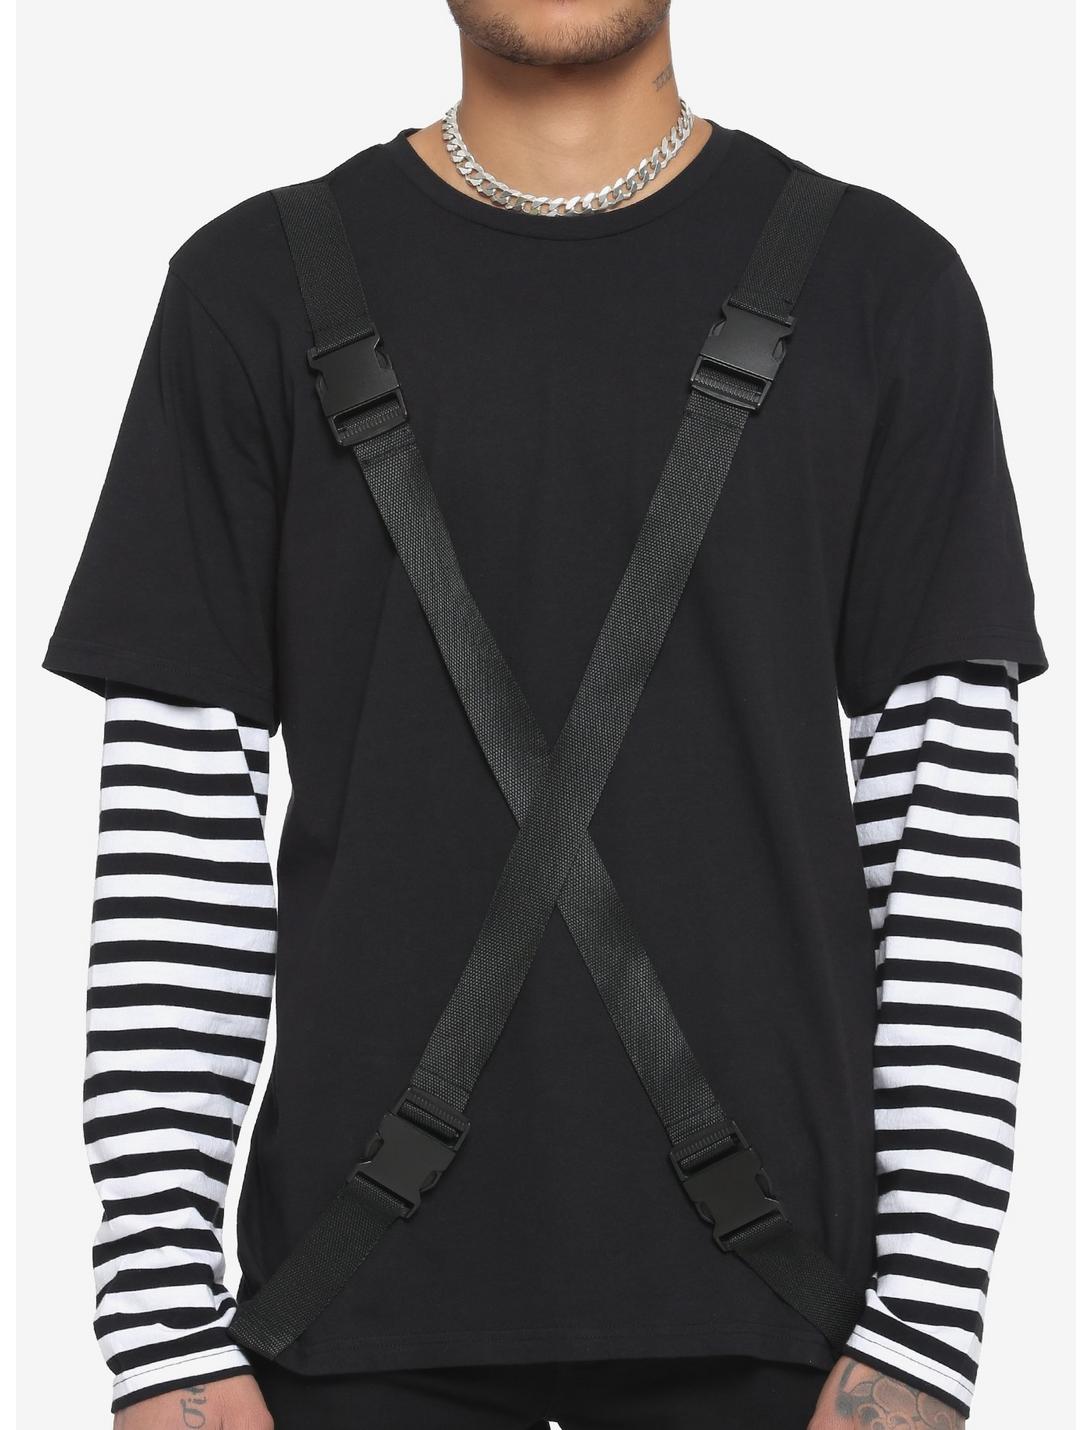 Black & White Stripe Sleeve With Straps Twofer Long-Sleeve T-Shirt, BLACK, hi-res